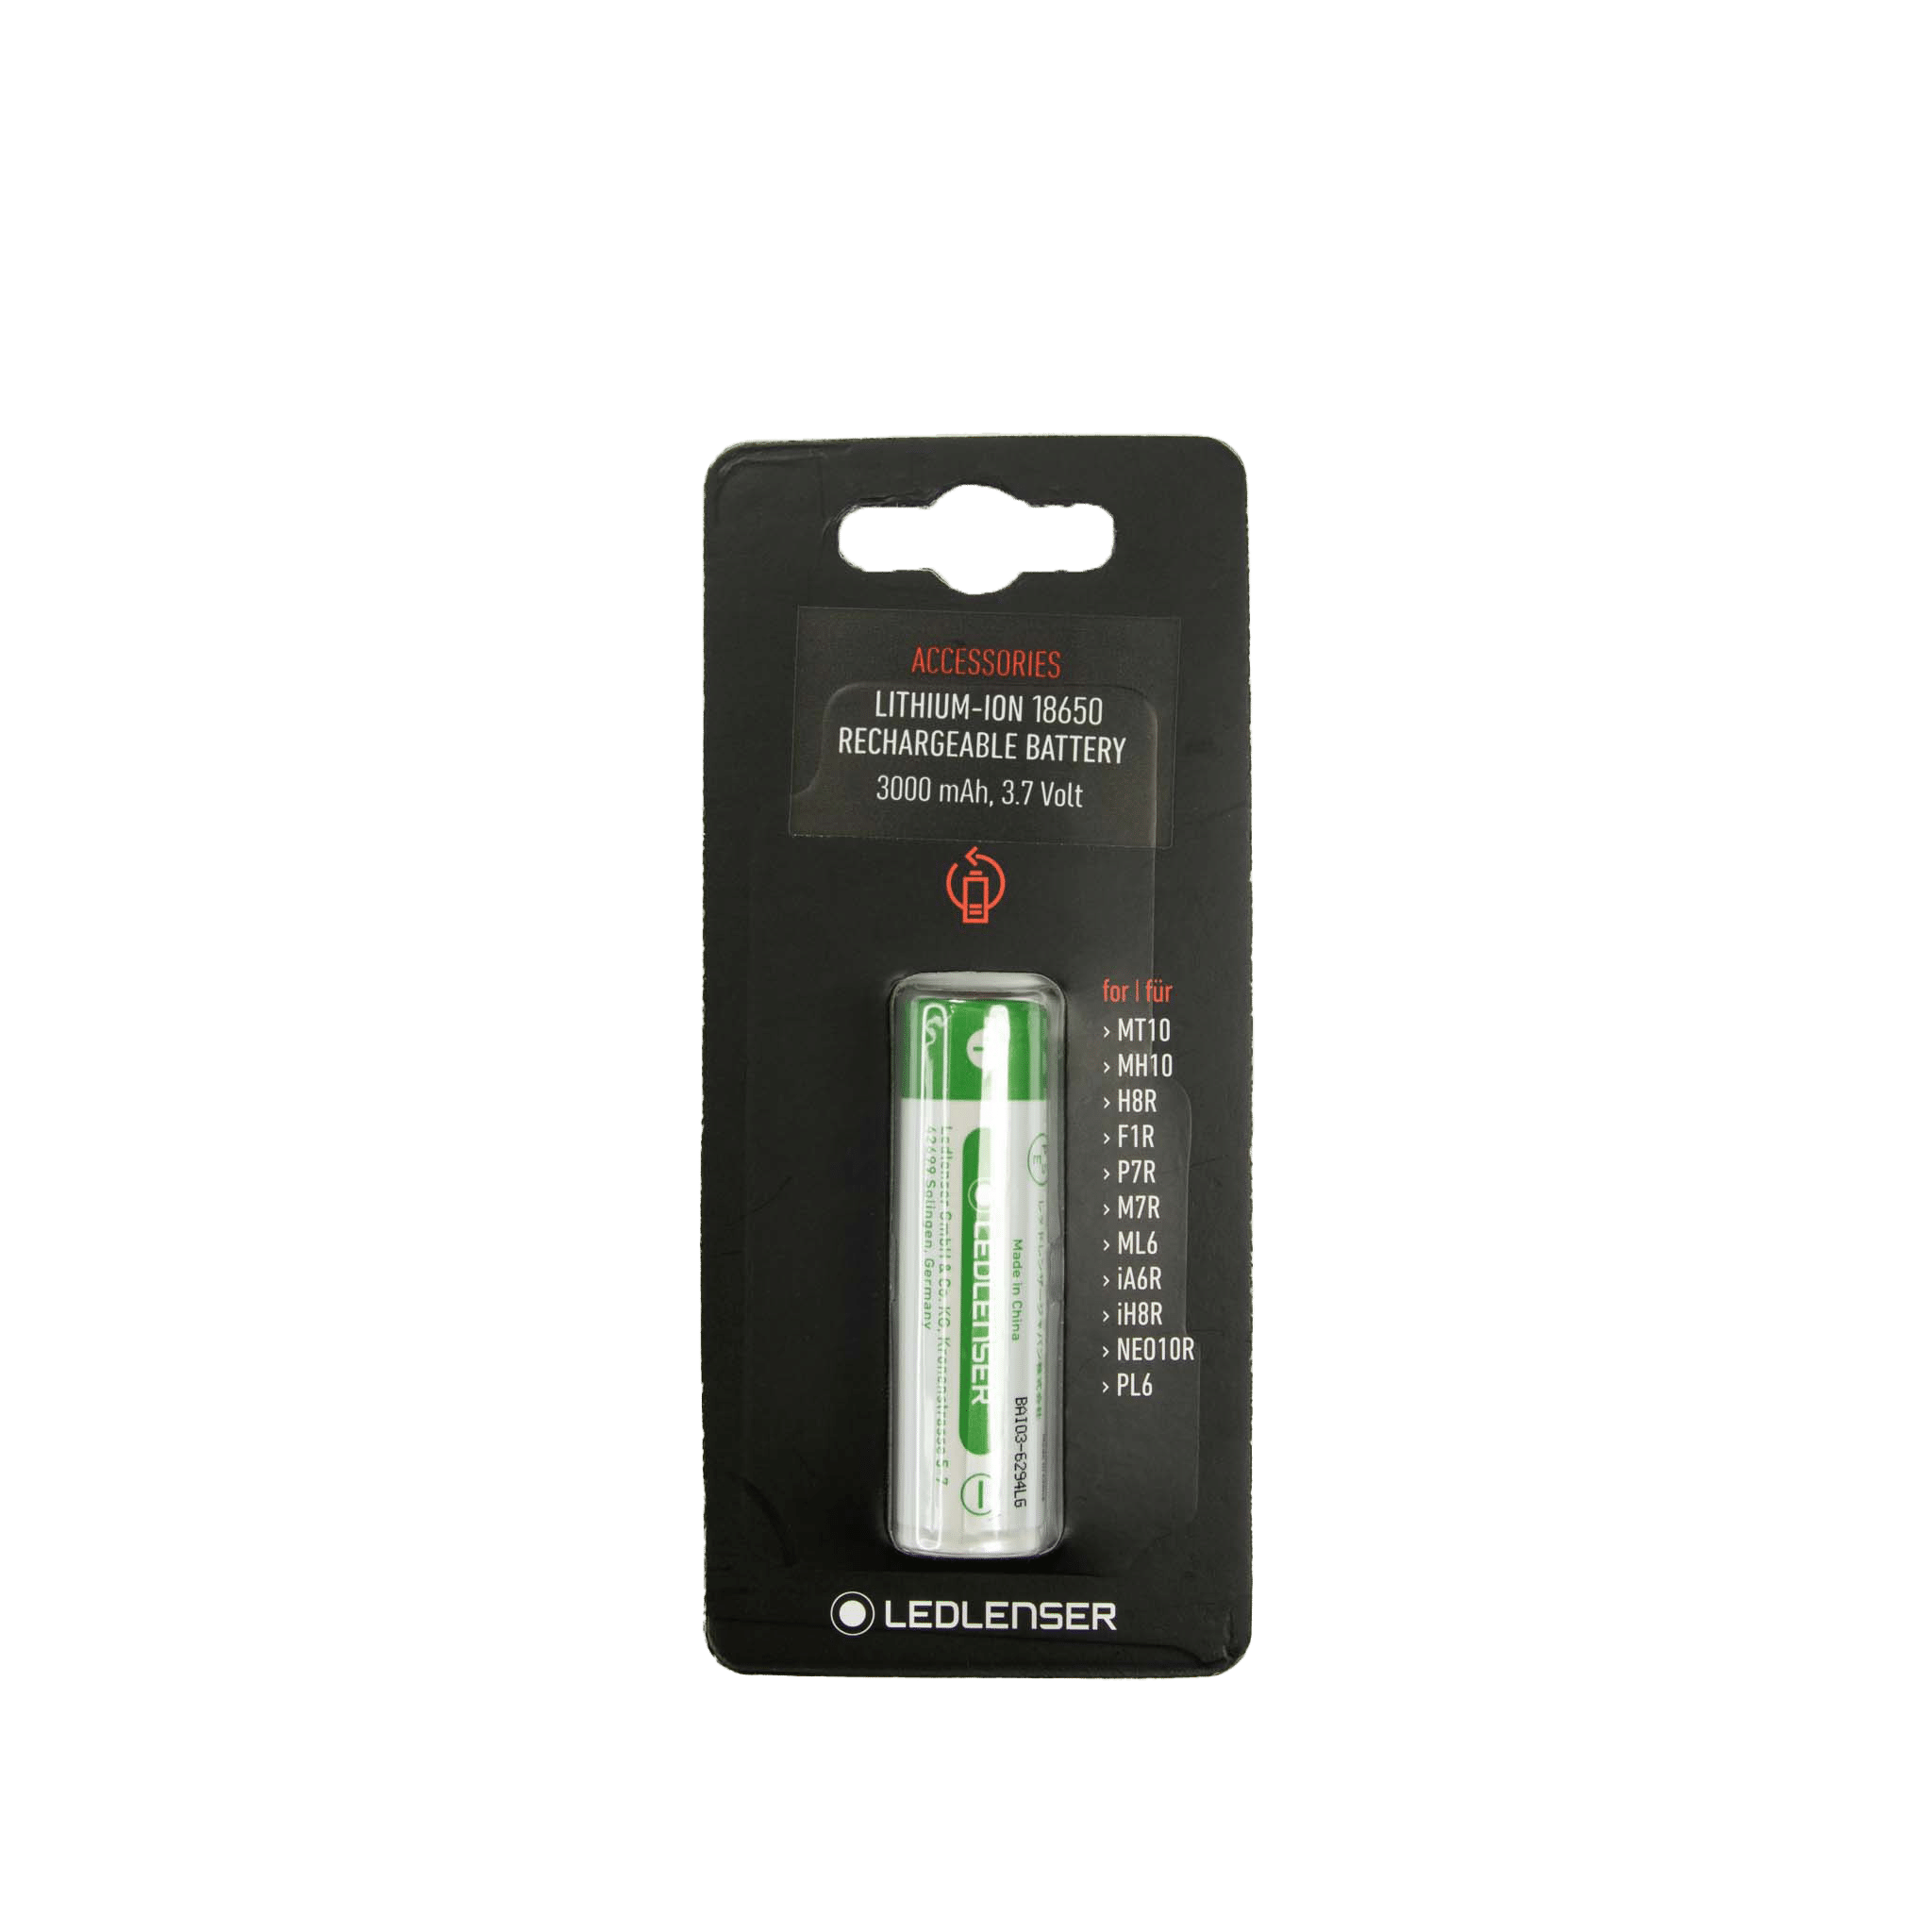 LED Lenser 18650 - Li-Ion rechargeable Battery 3000 mAh